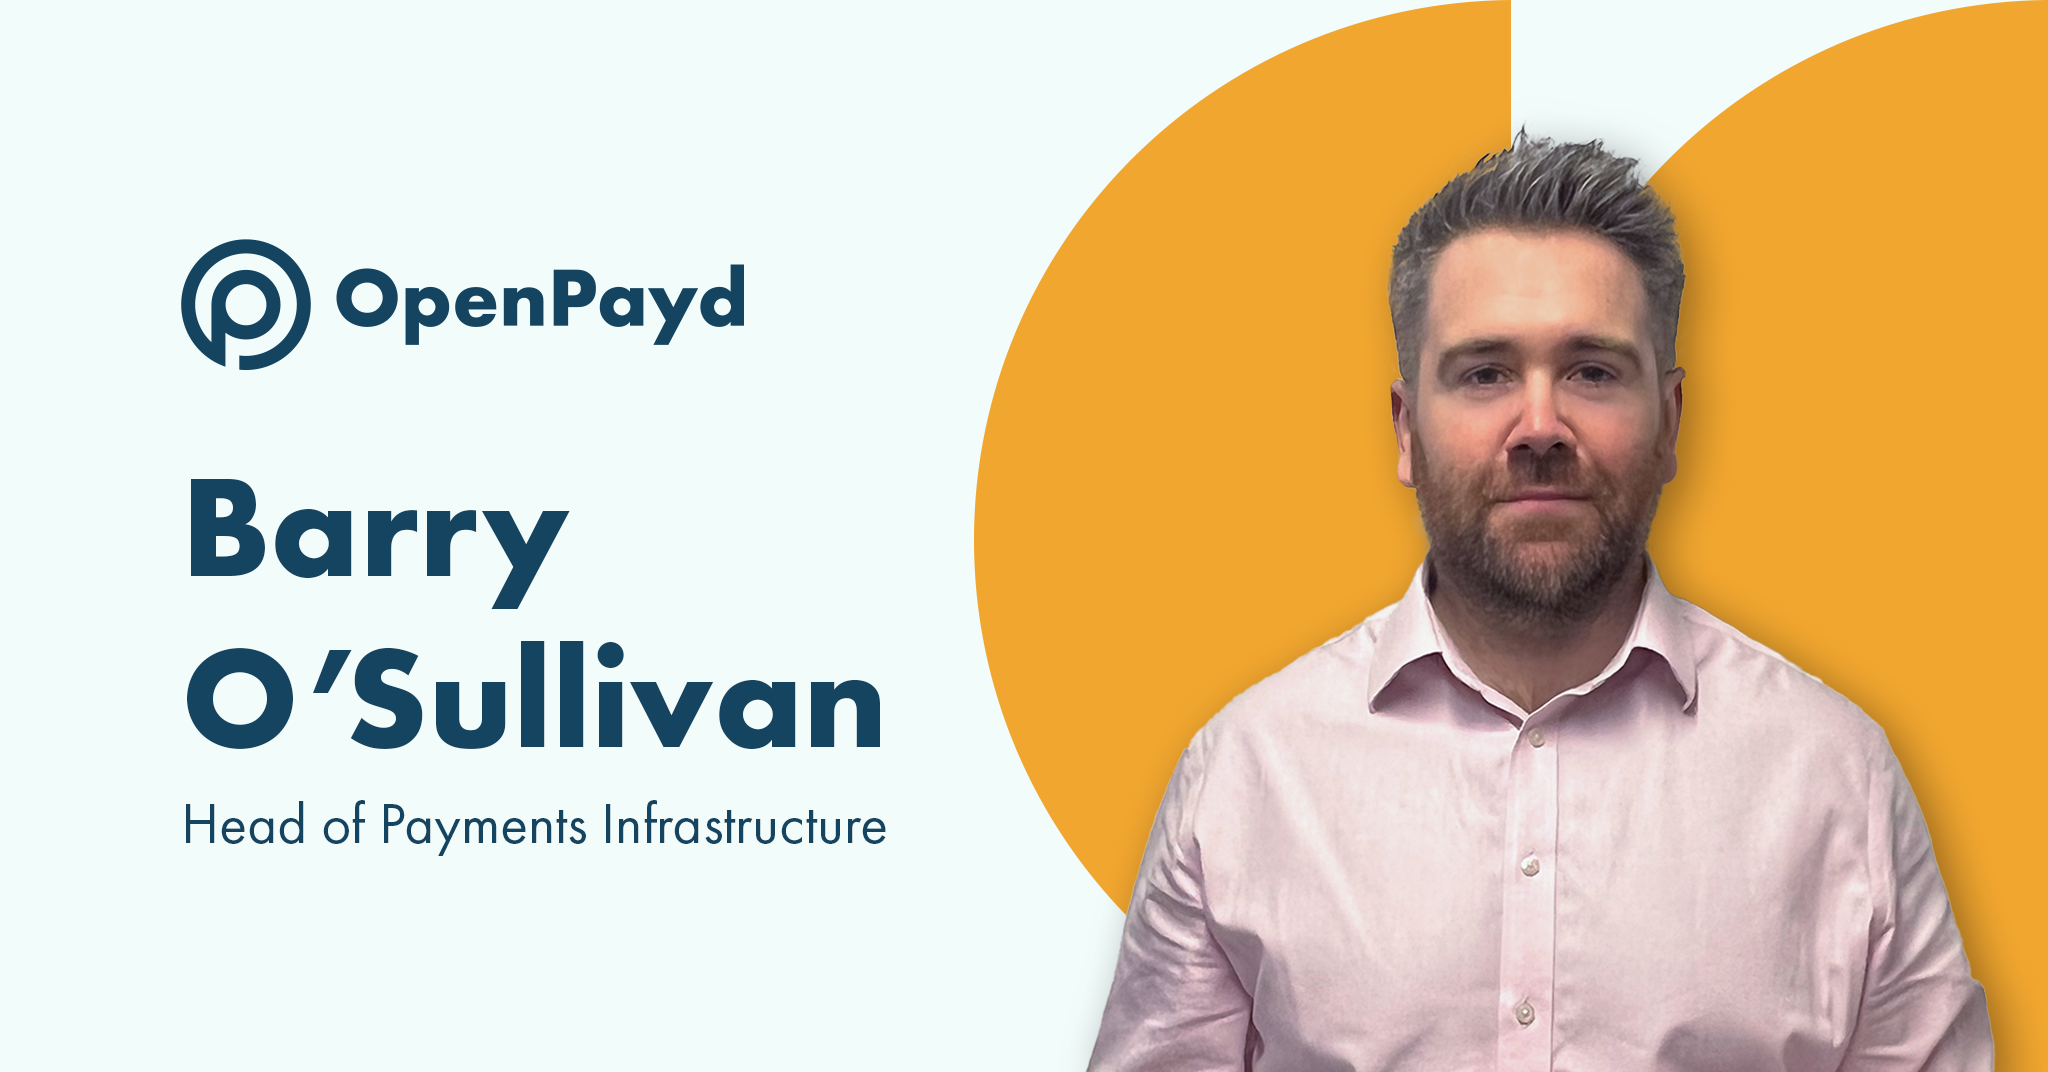 Barry O'Sullivan joins OpenPayd